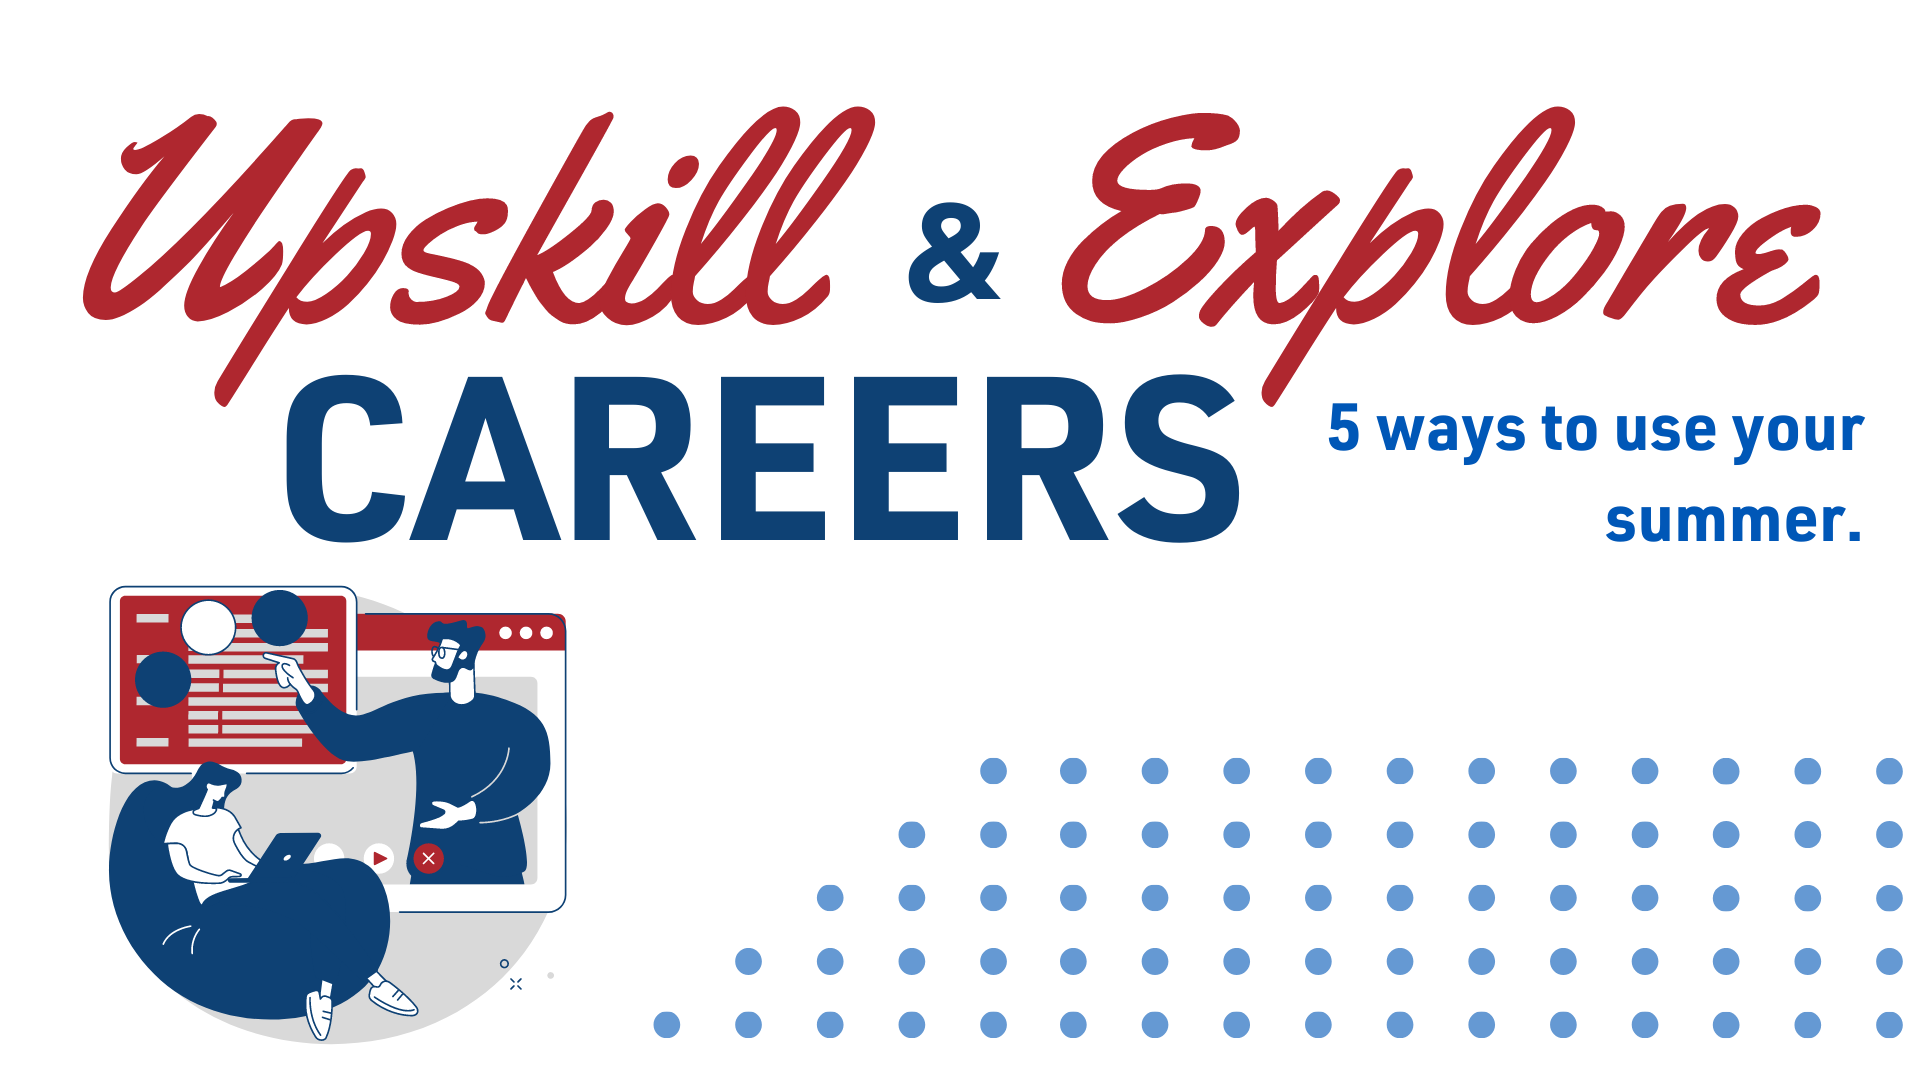 Upskill and Explore Careers